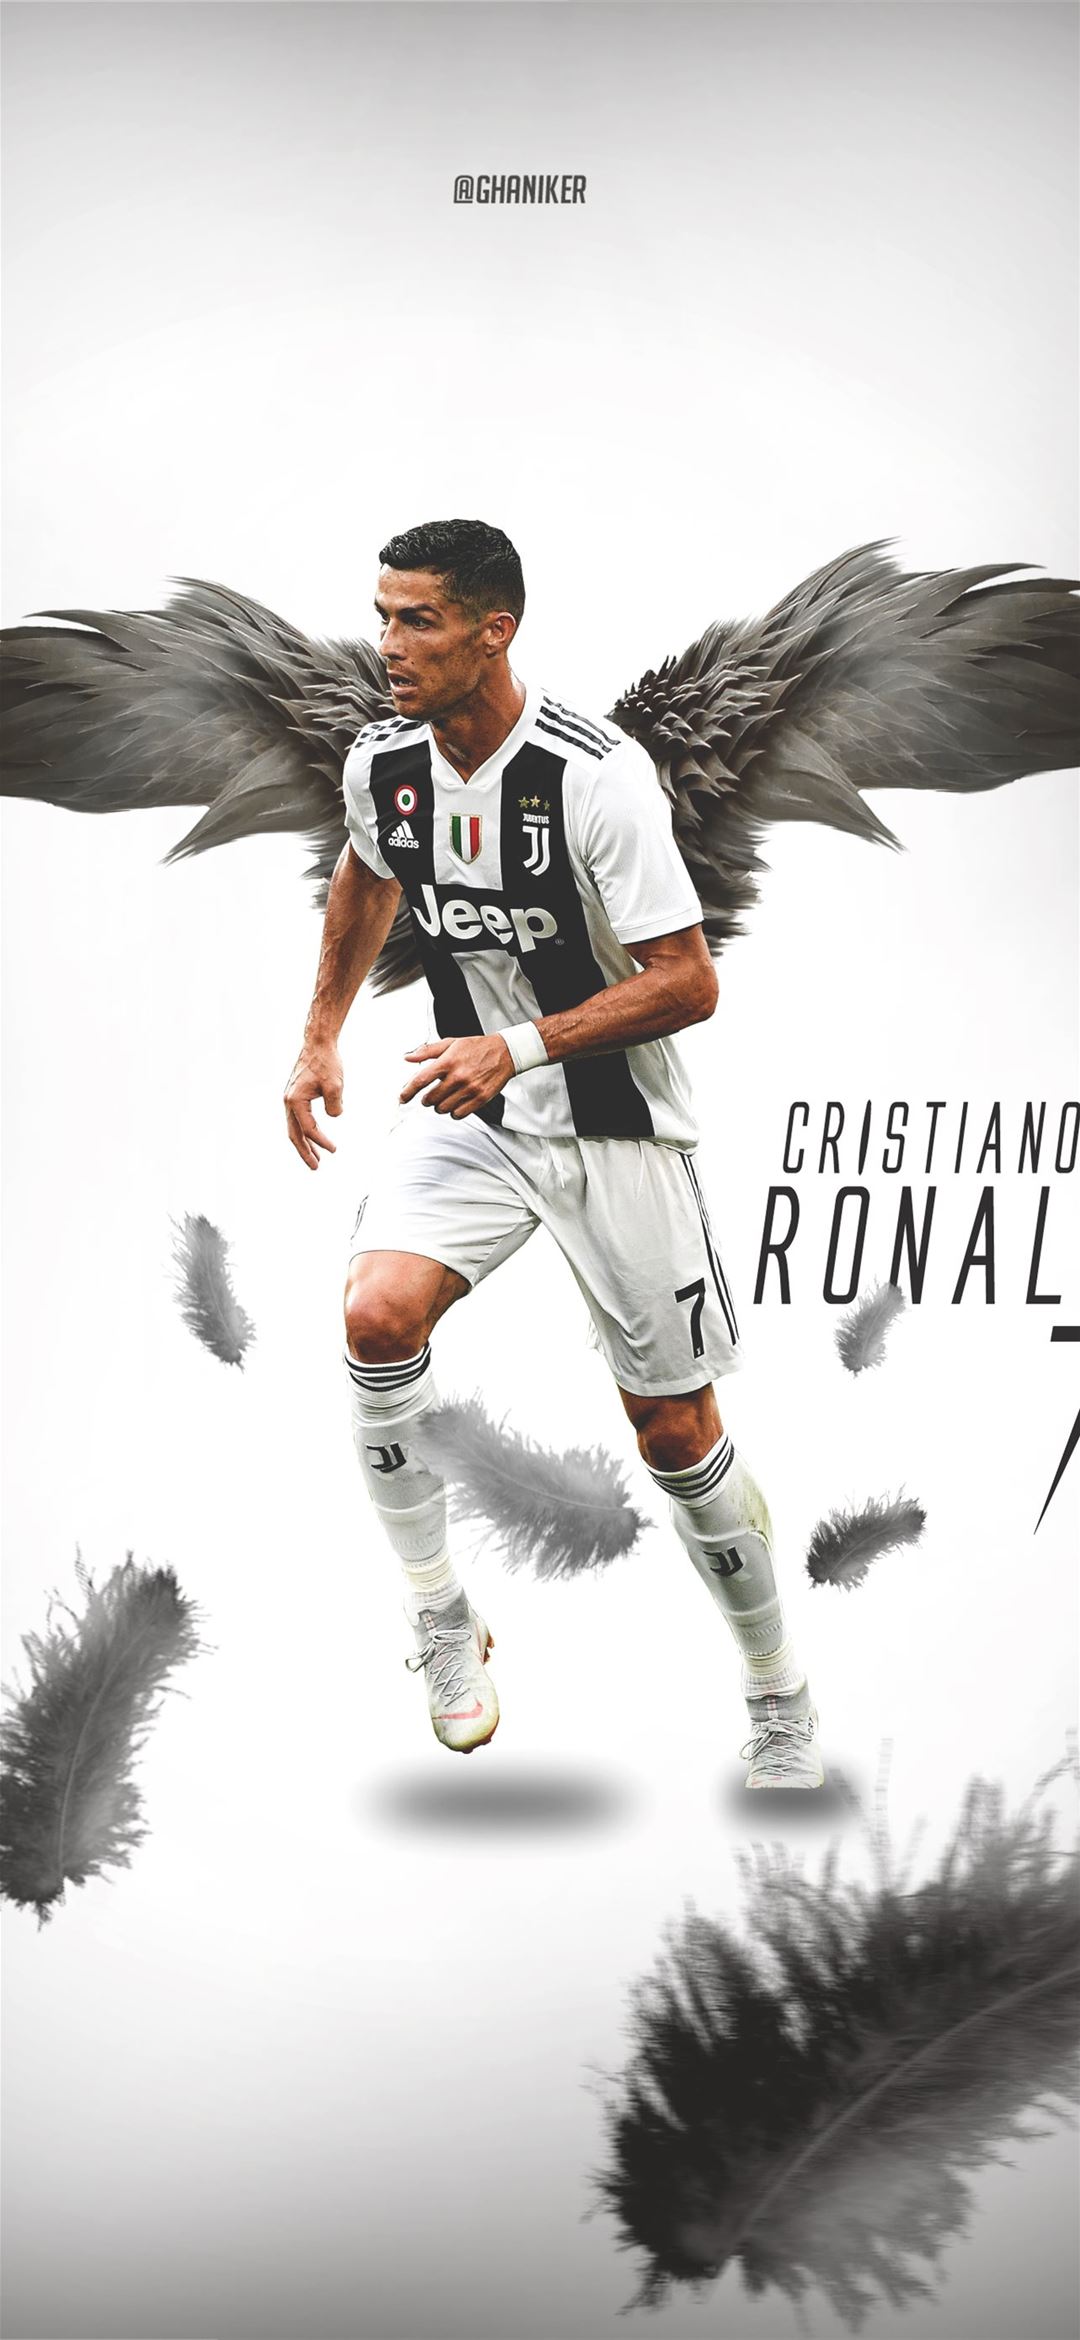 ♛ Cristiano Ronaldo Juventus ♛ iPhone Wallpaper Free Download